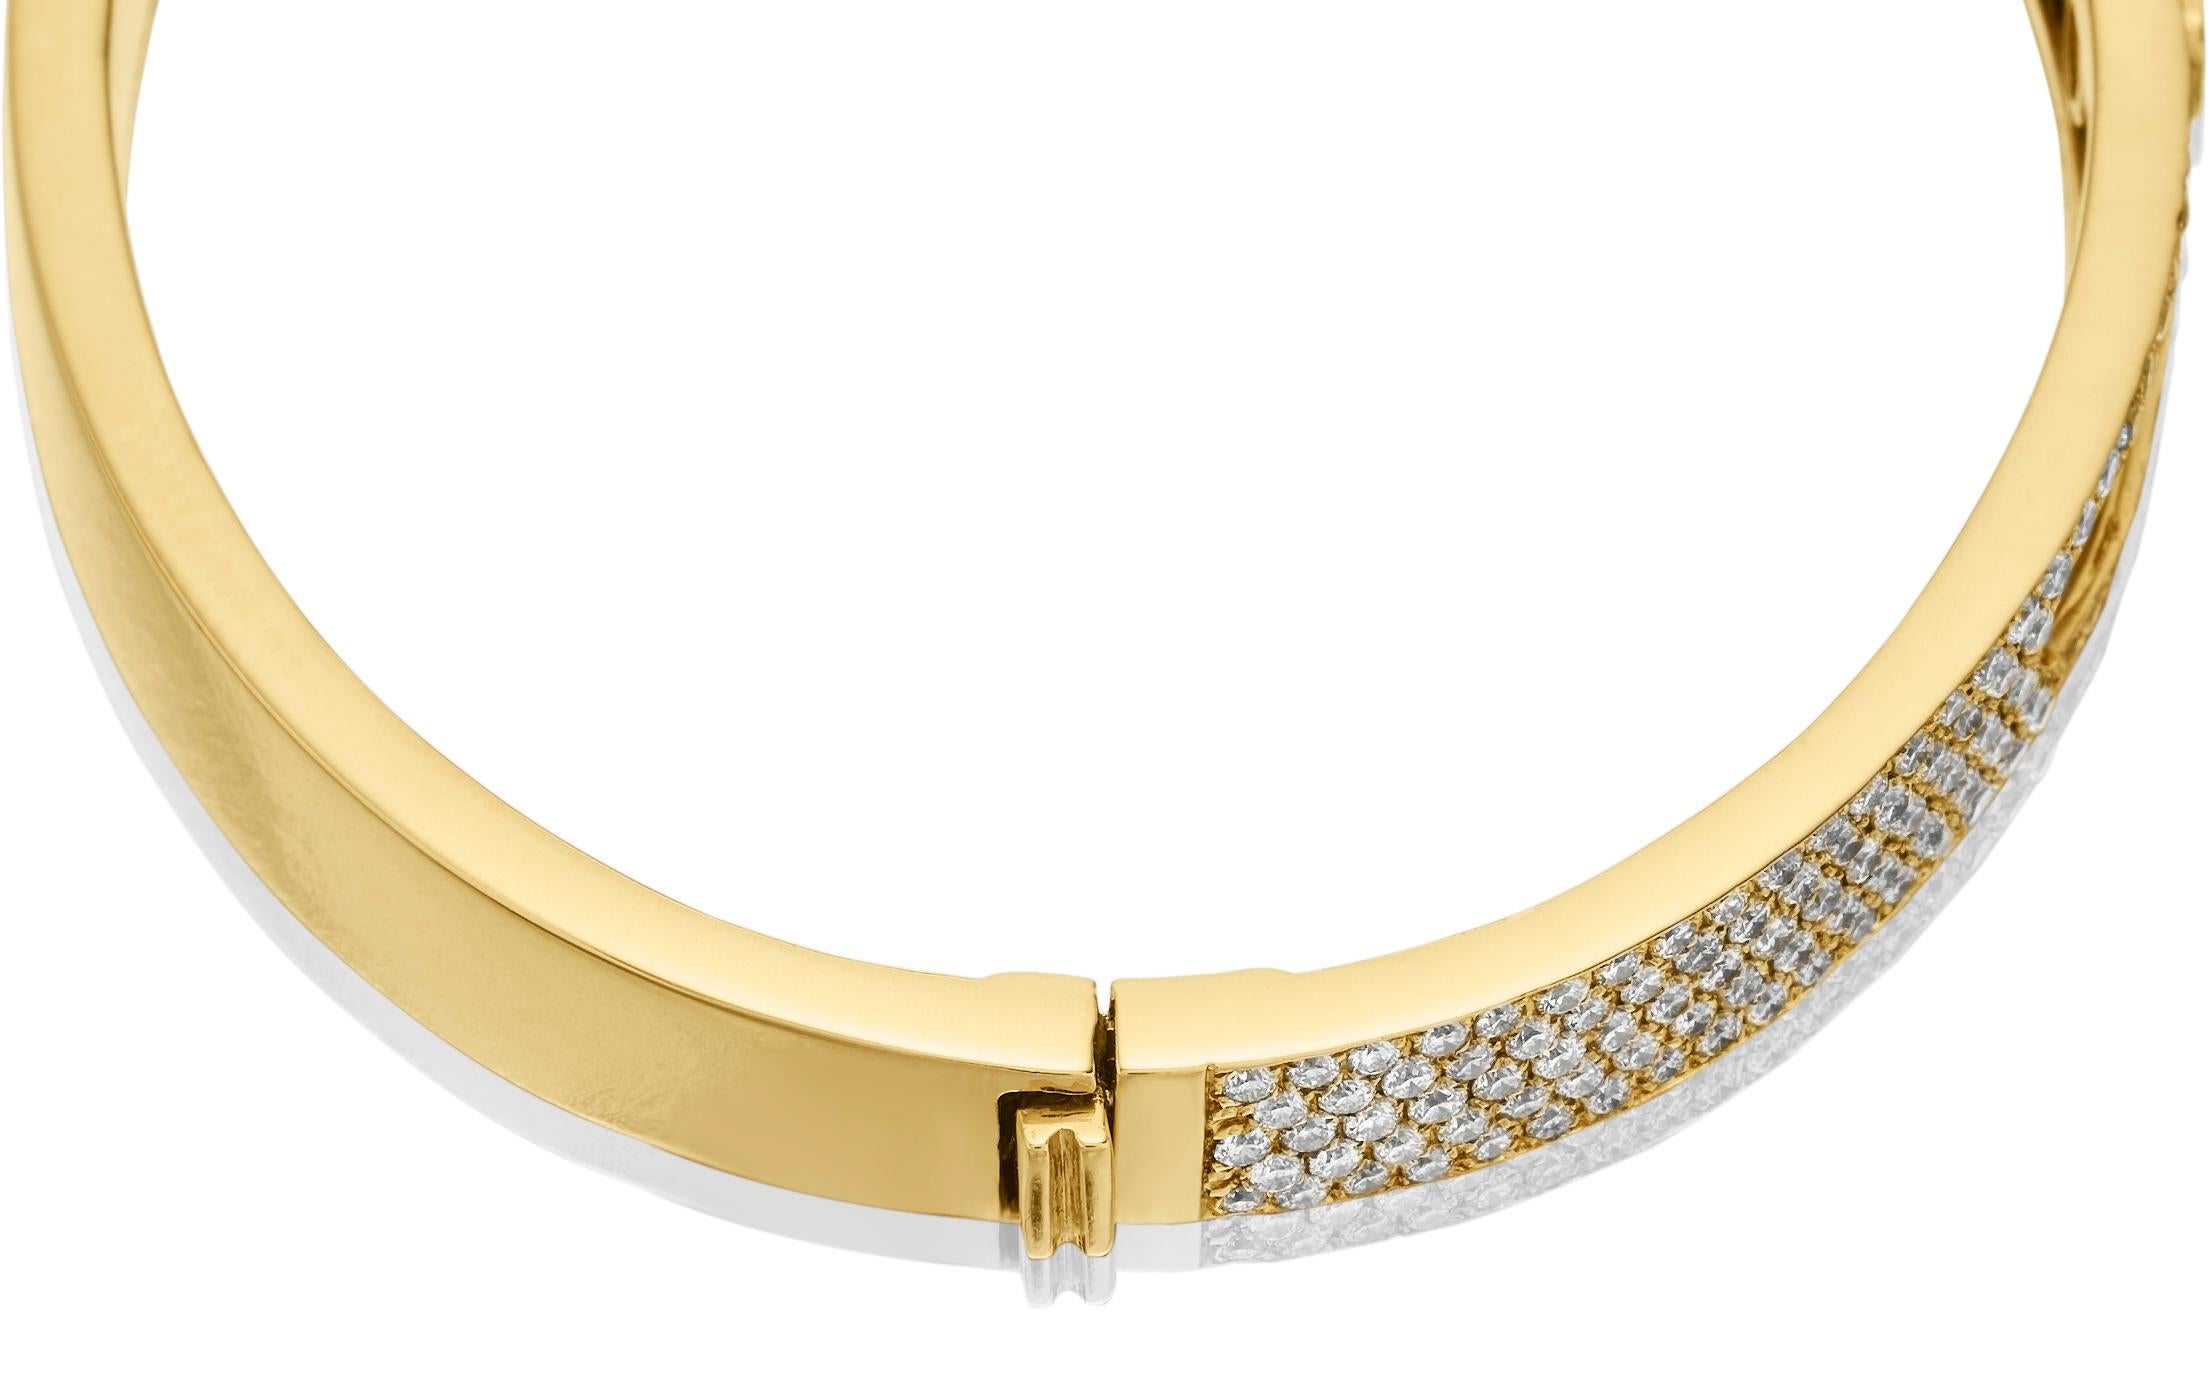 Women's Designer Happy Diamonds Bangle in 18-K Yellow Gold For Sale